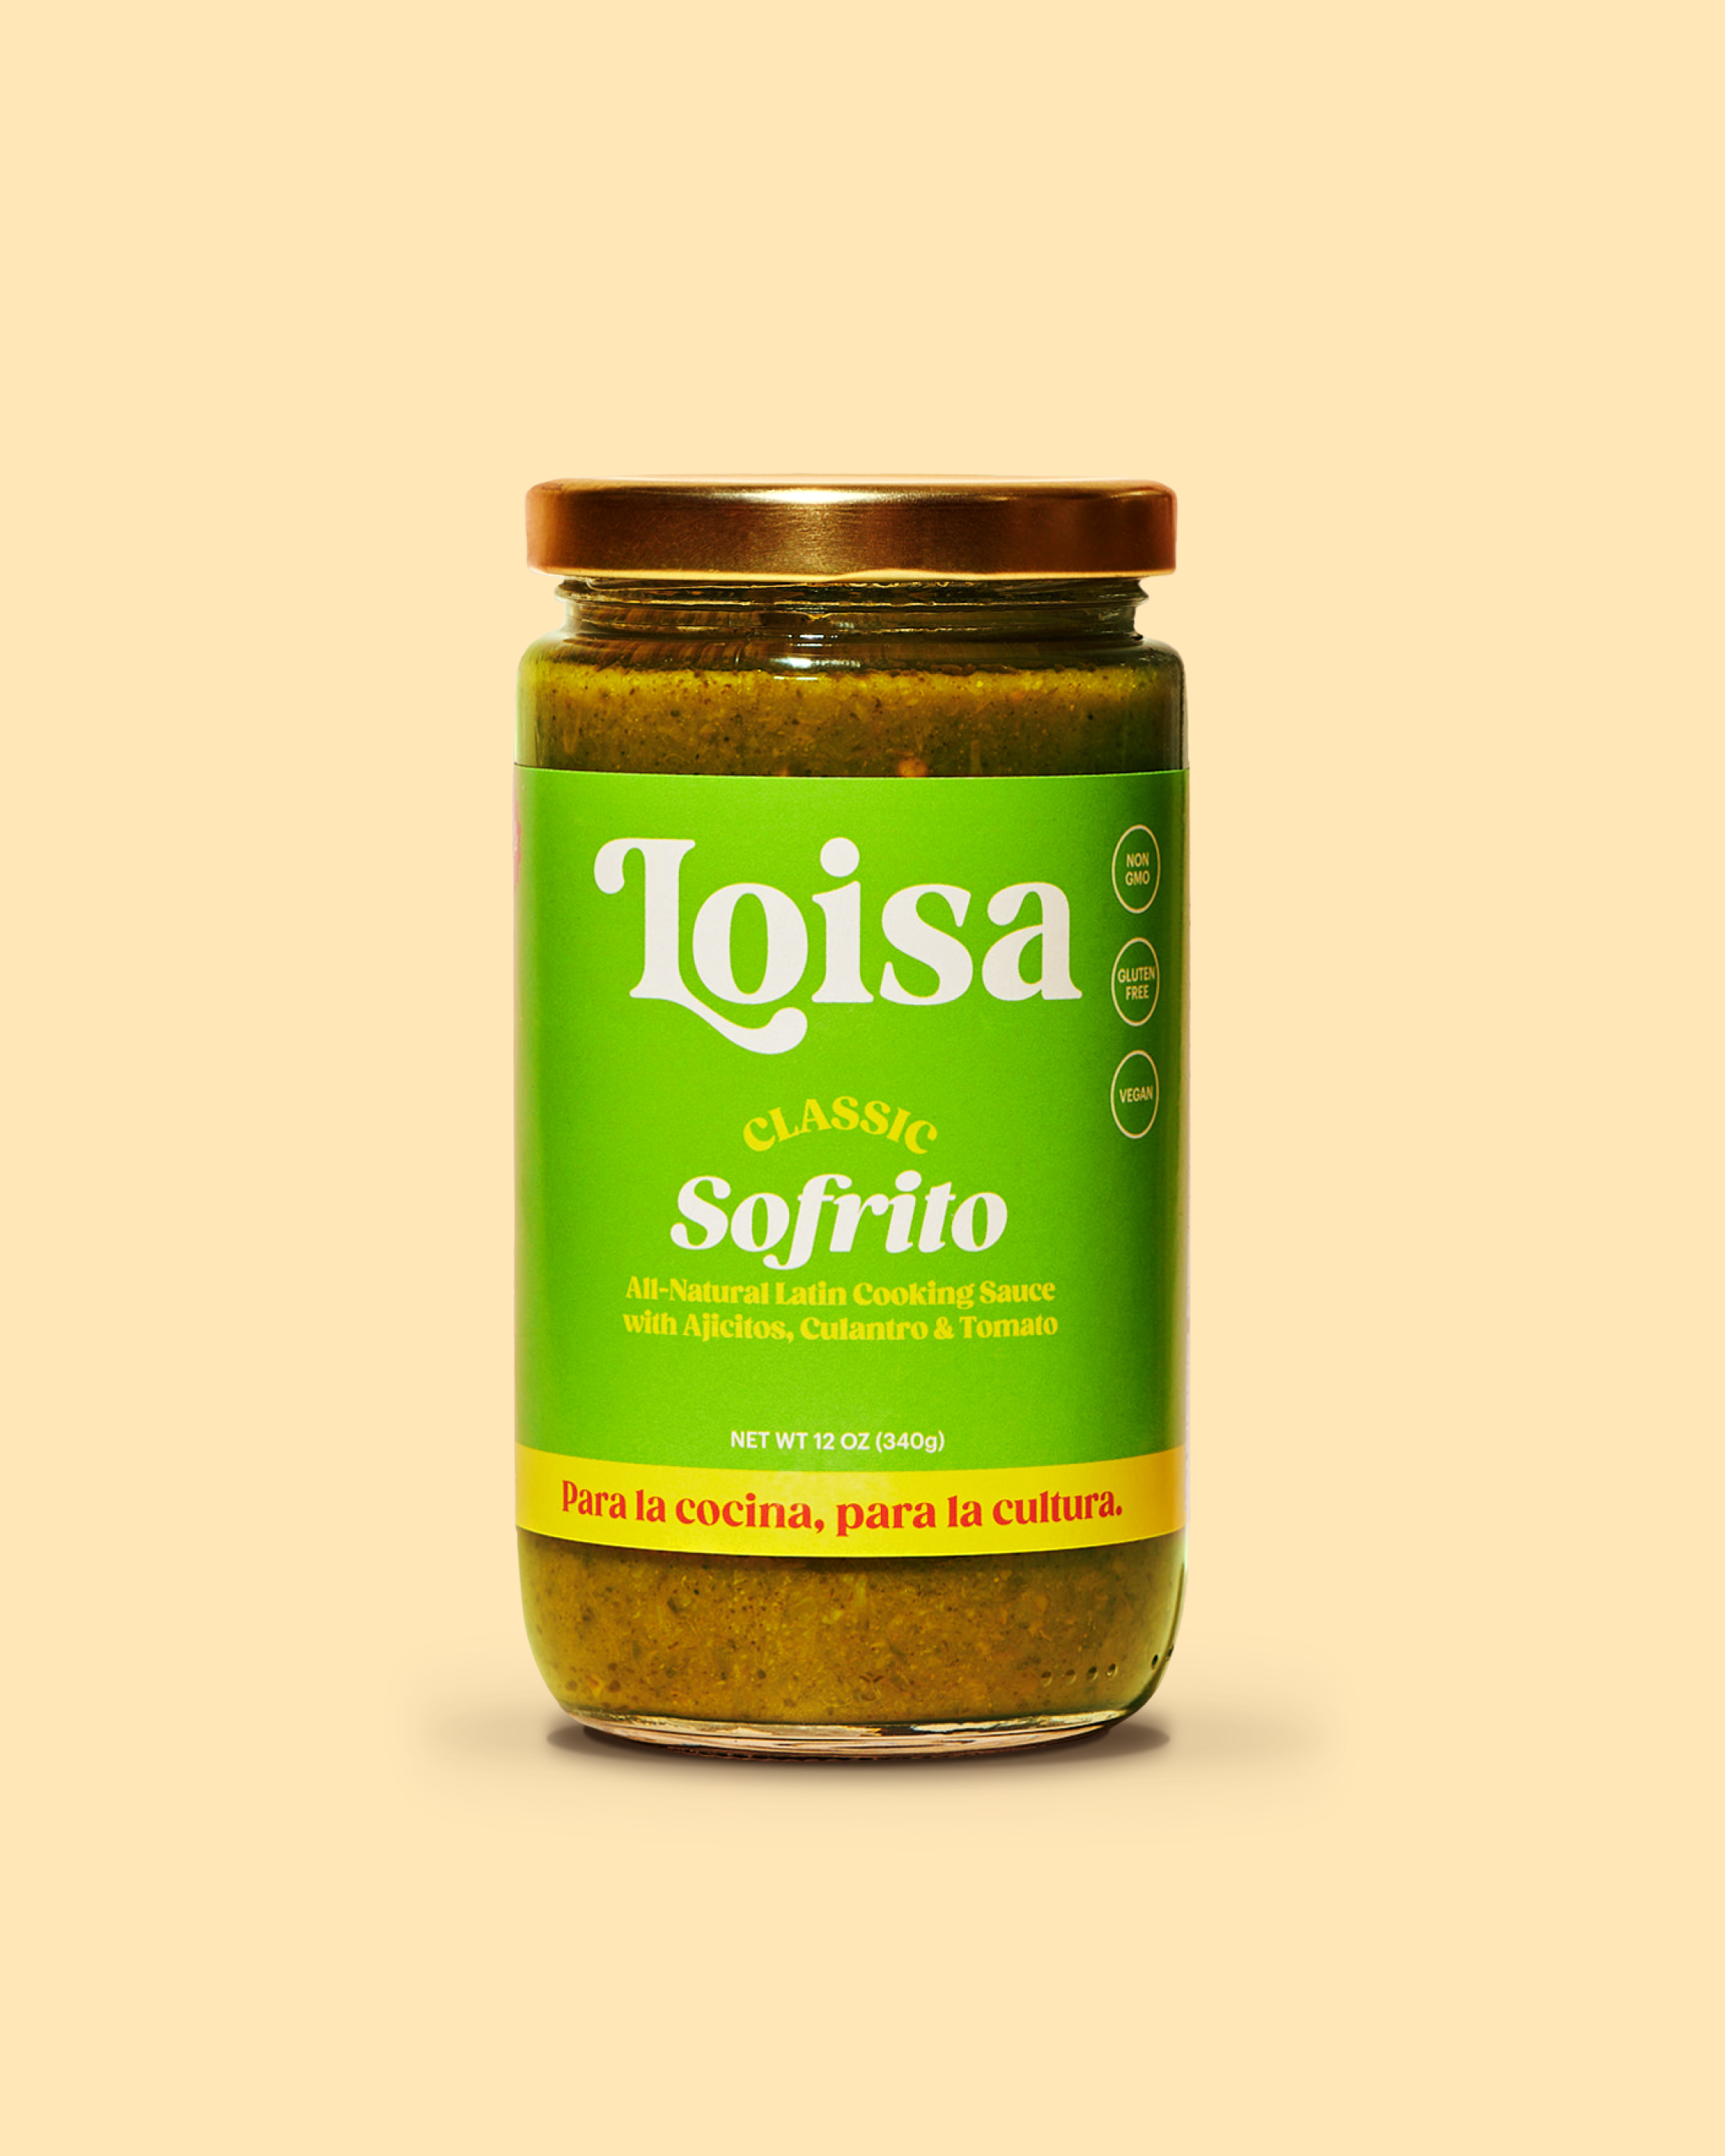 Loisa, Salt Free Organic Sazón